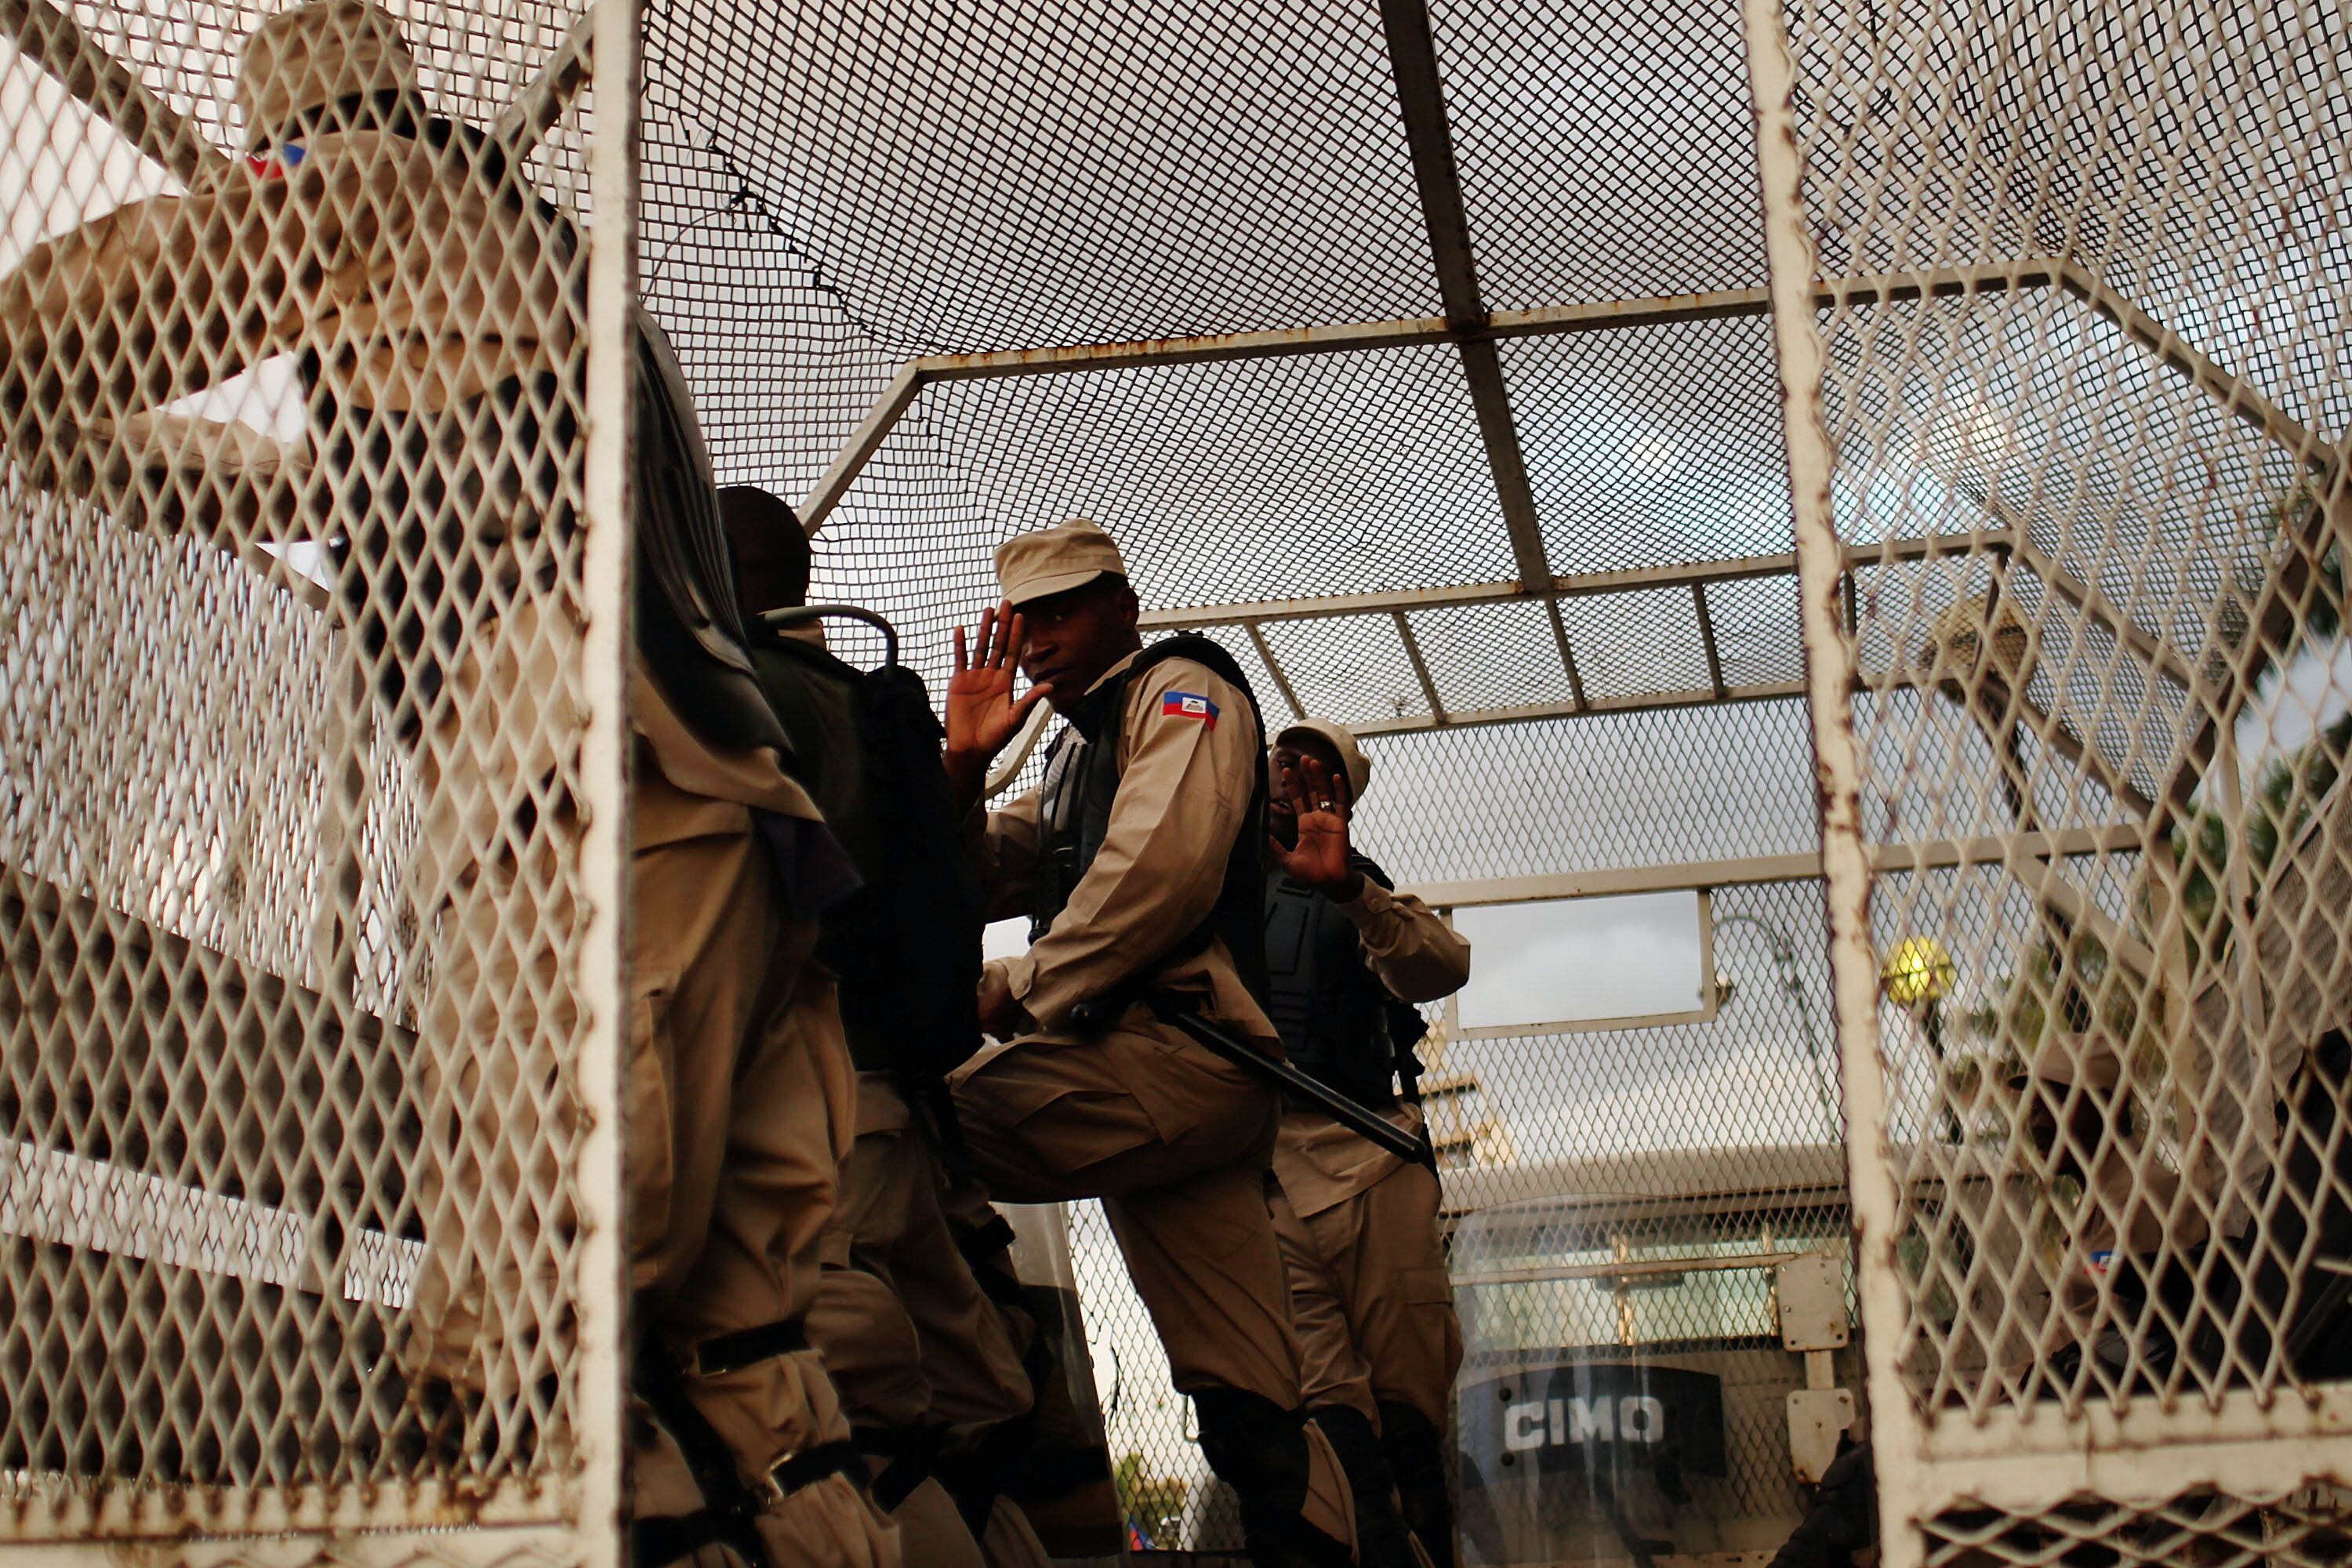 08-03-2012 Policía haitiana en Puerto Príncipe, HaitíPOLITICA LATINOAMÉRICA HAITÍSPENCER PLATT